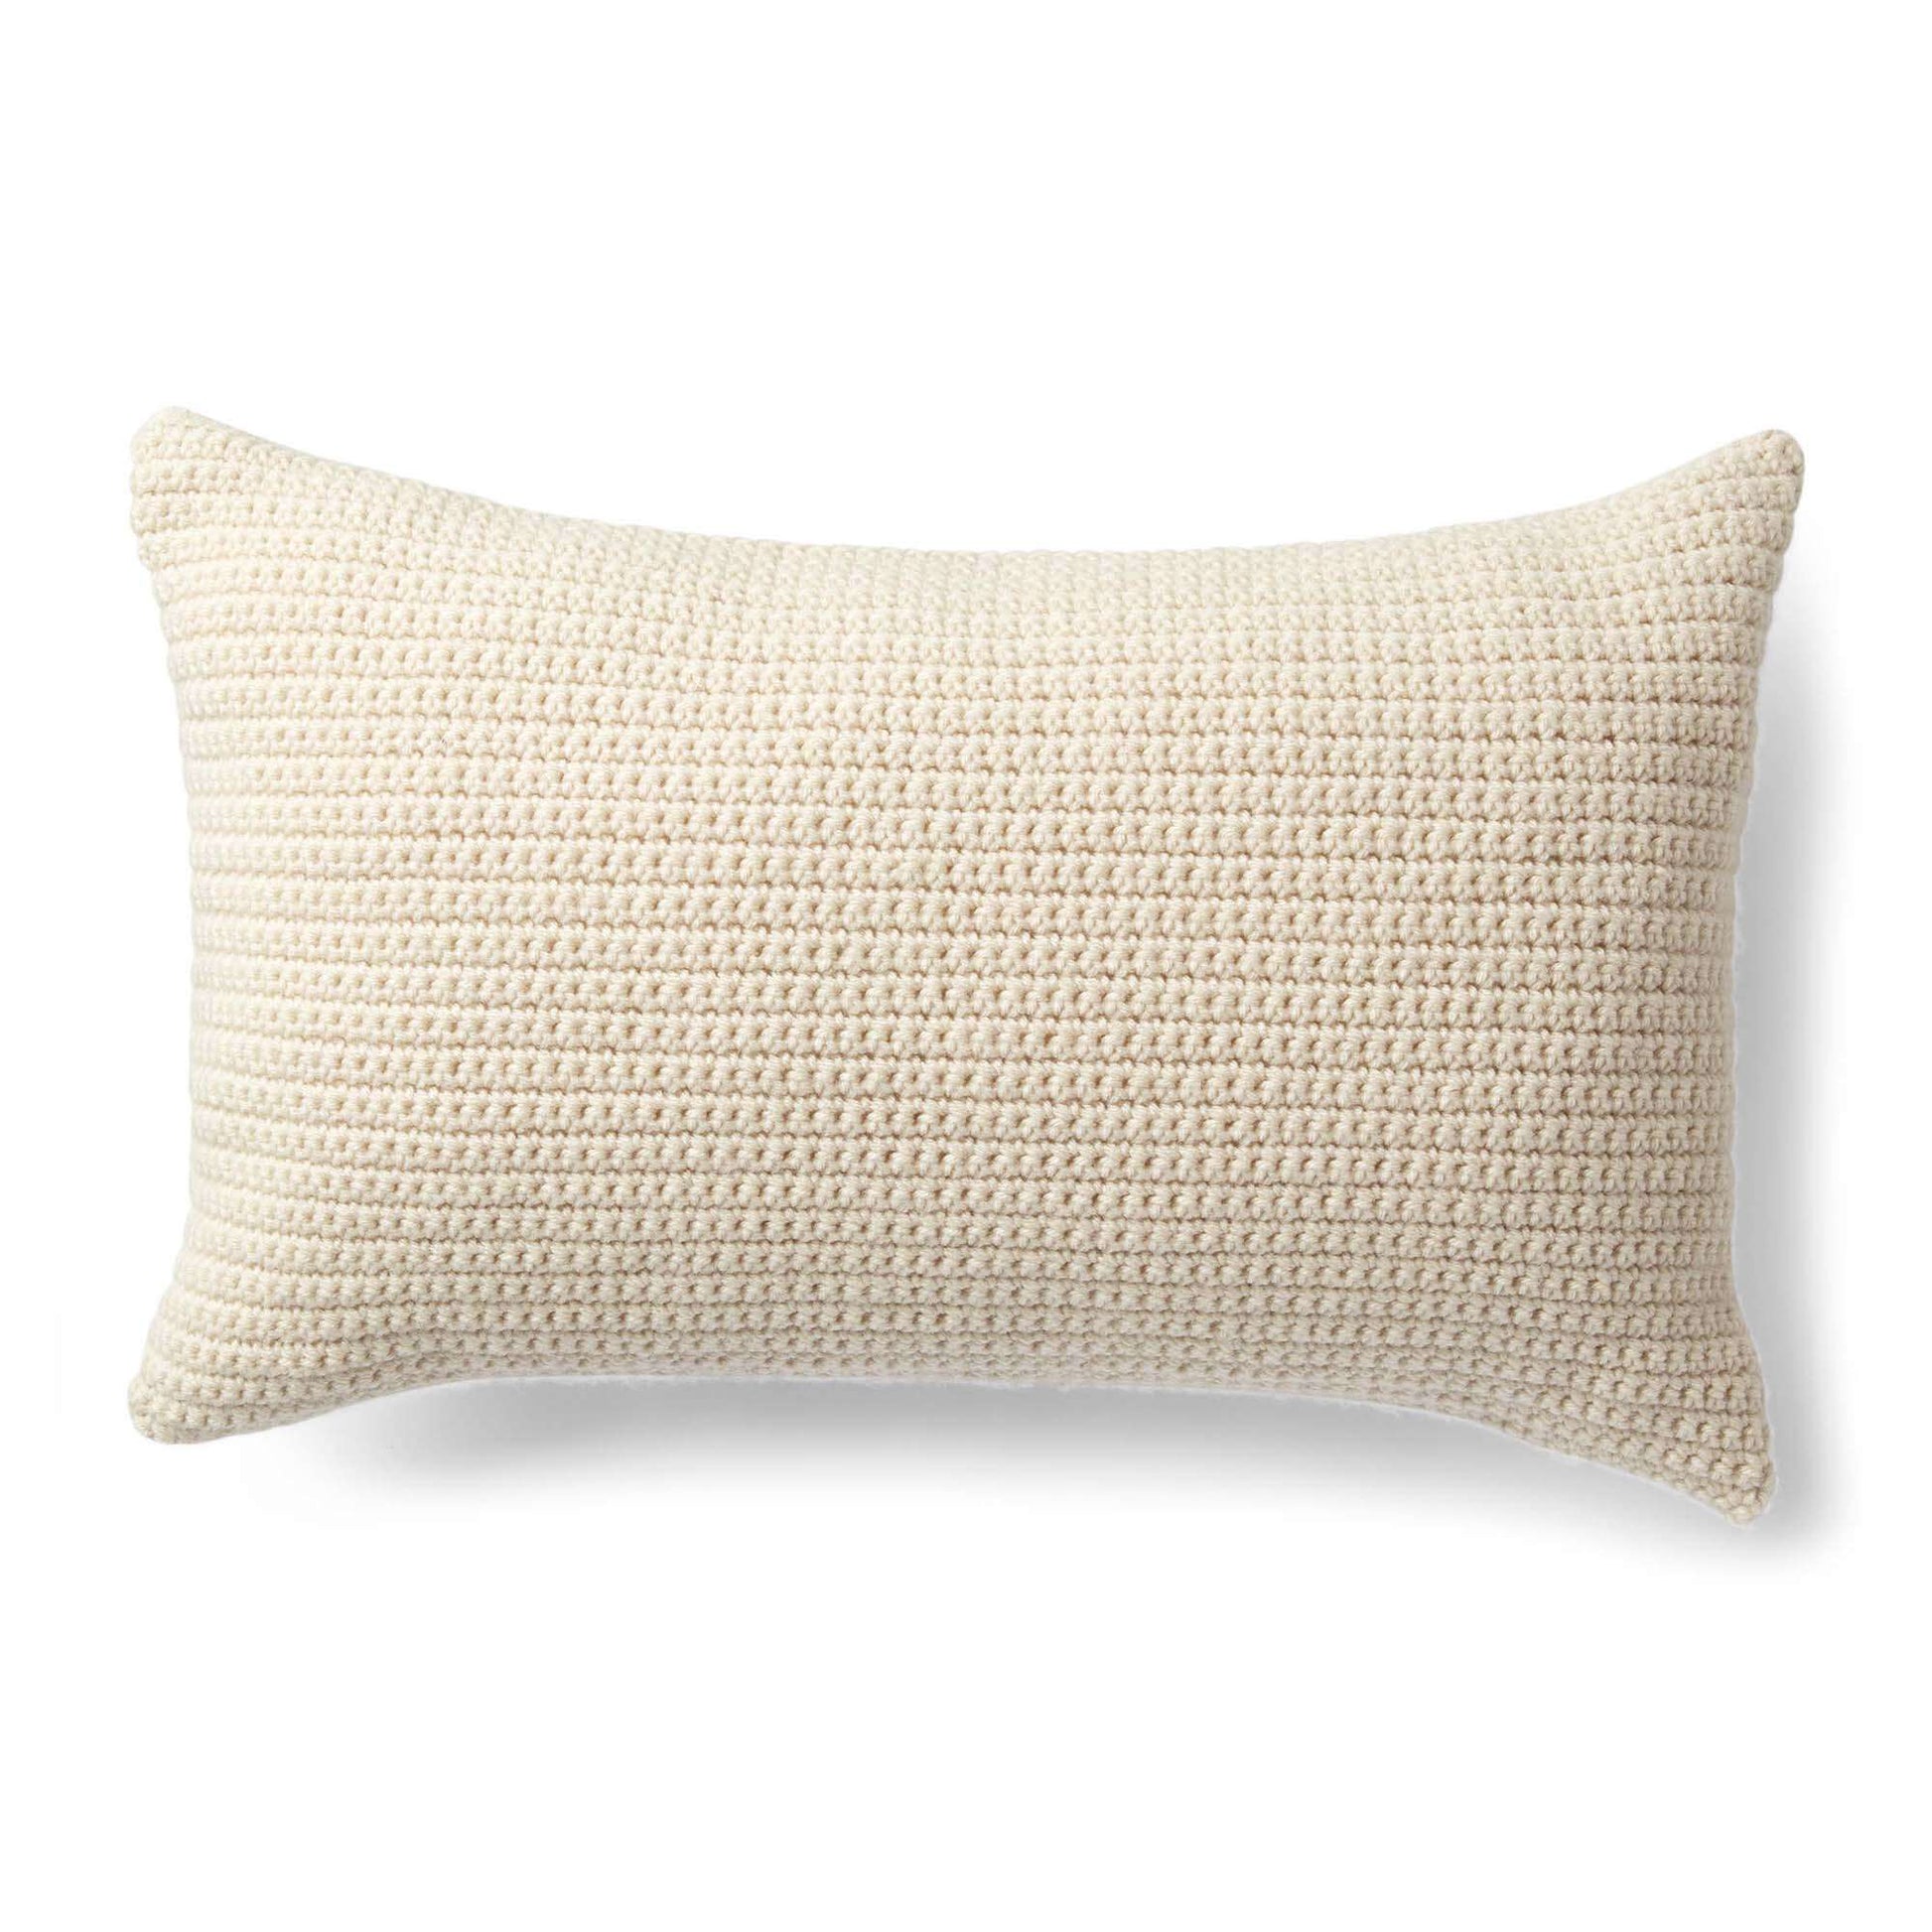 Free Caron Crochet & Cross Stitch "Maker" Pillow Pattern